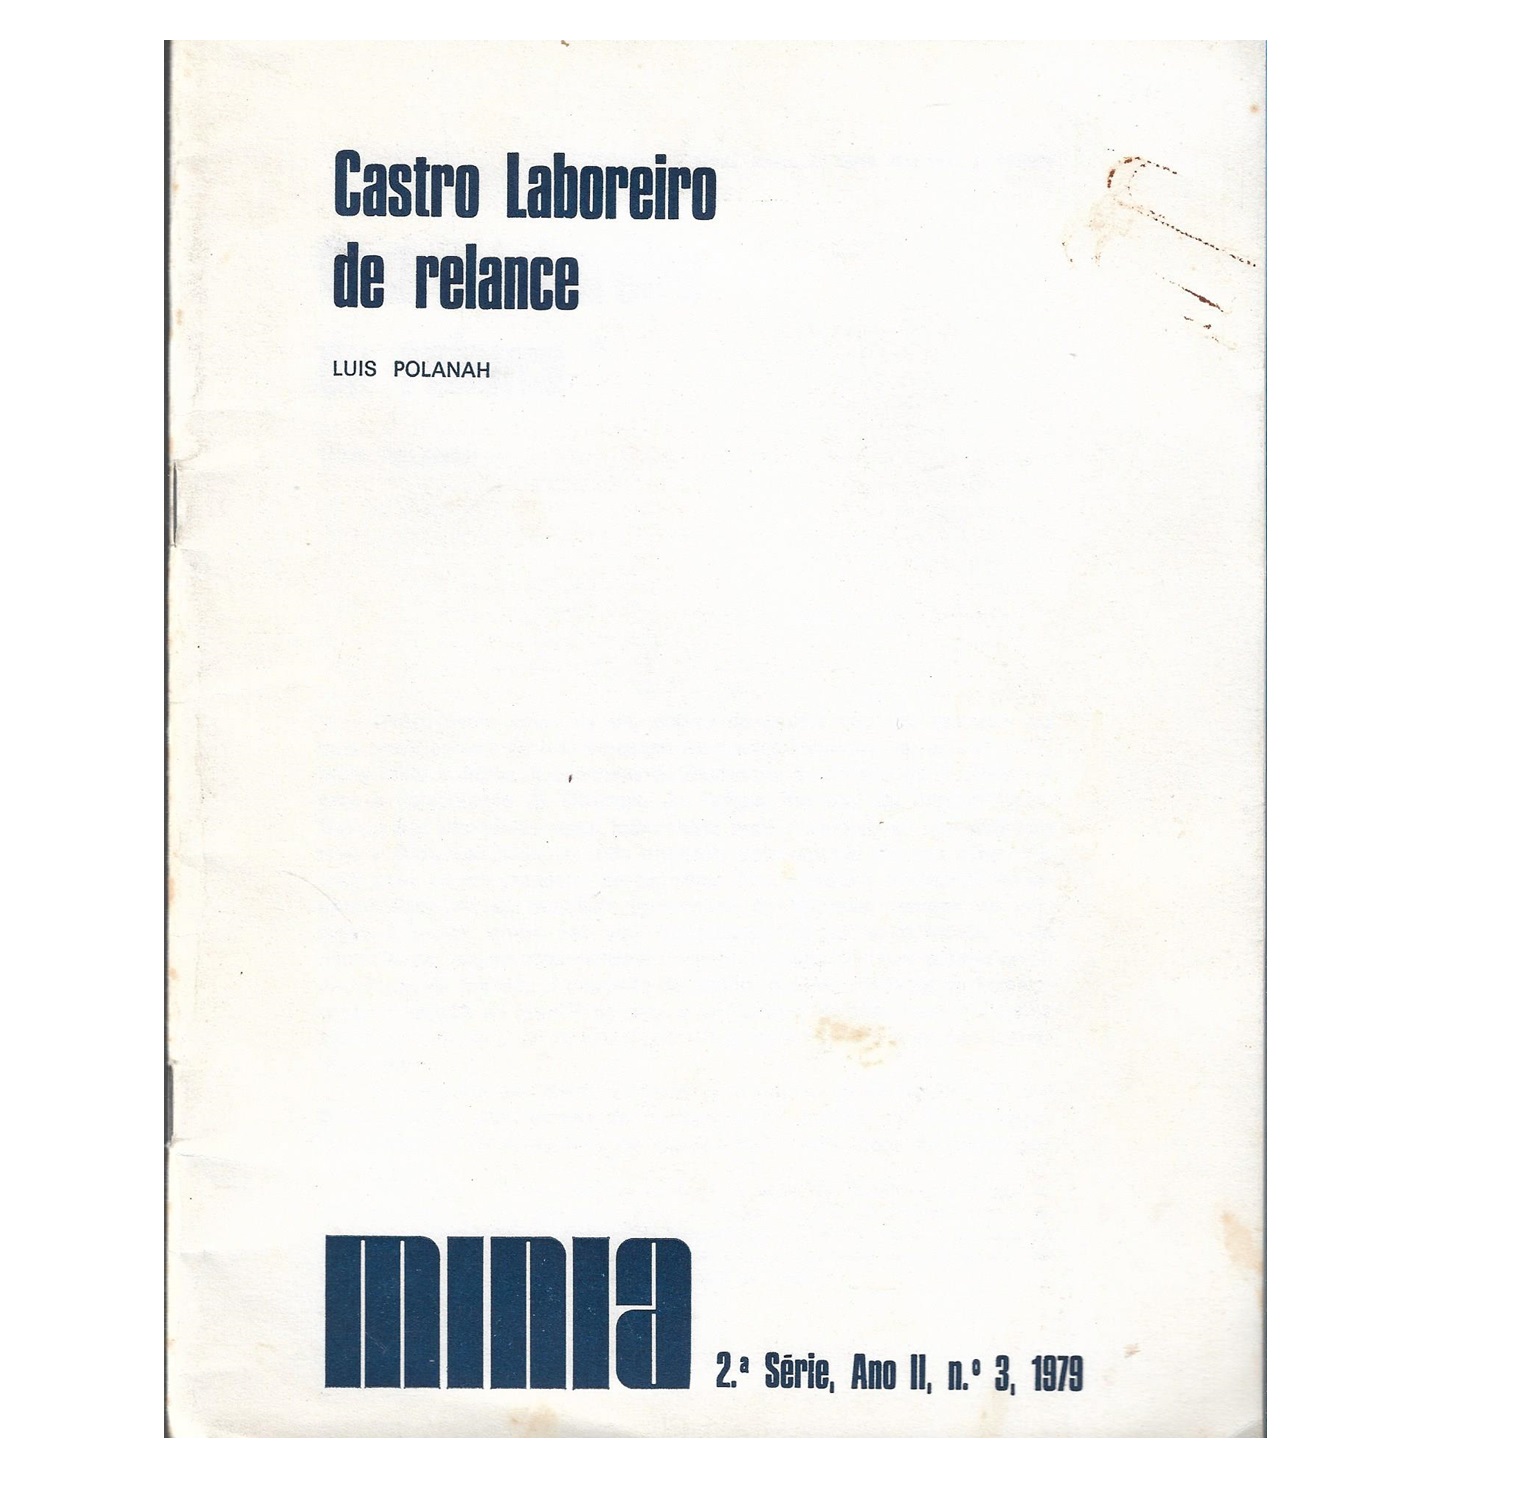 CASTRO LABOREIRO DE RELANCE [1977]